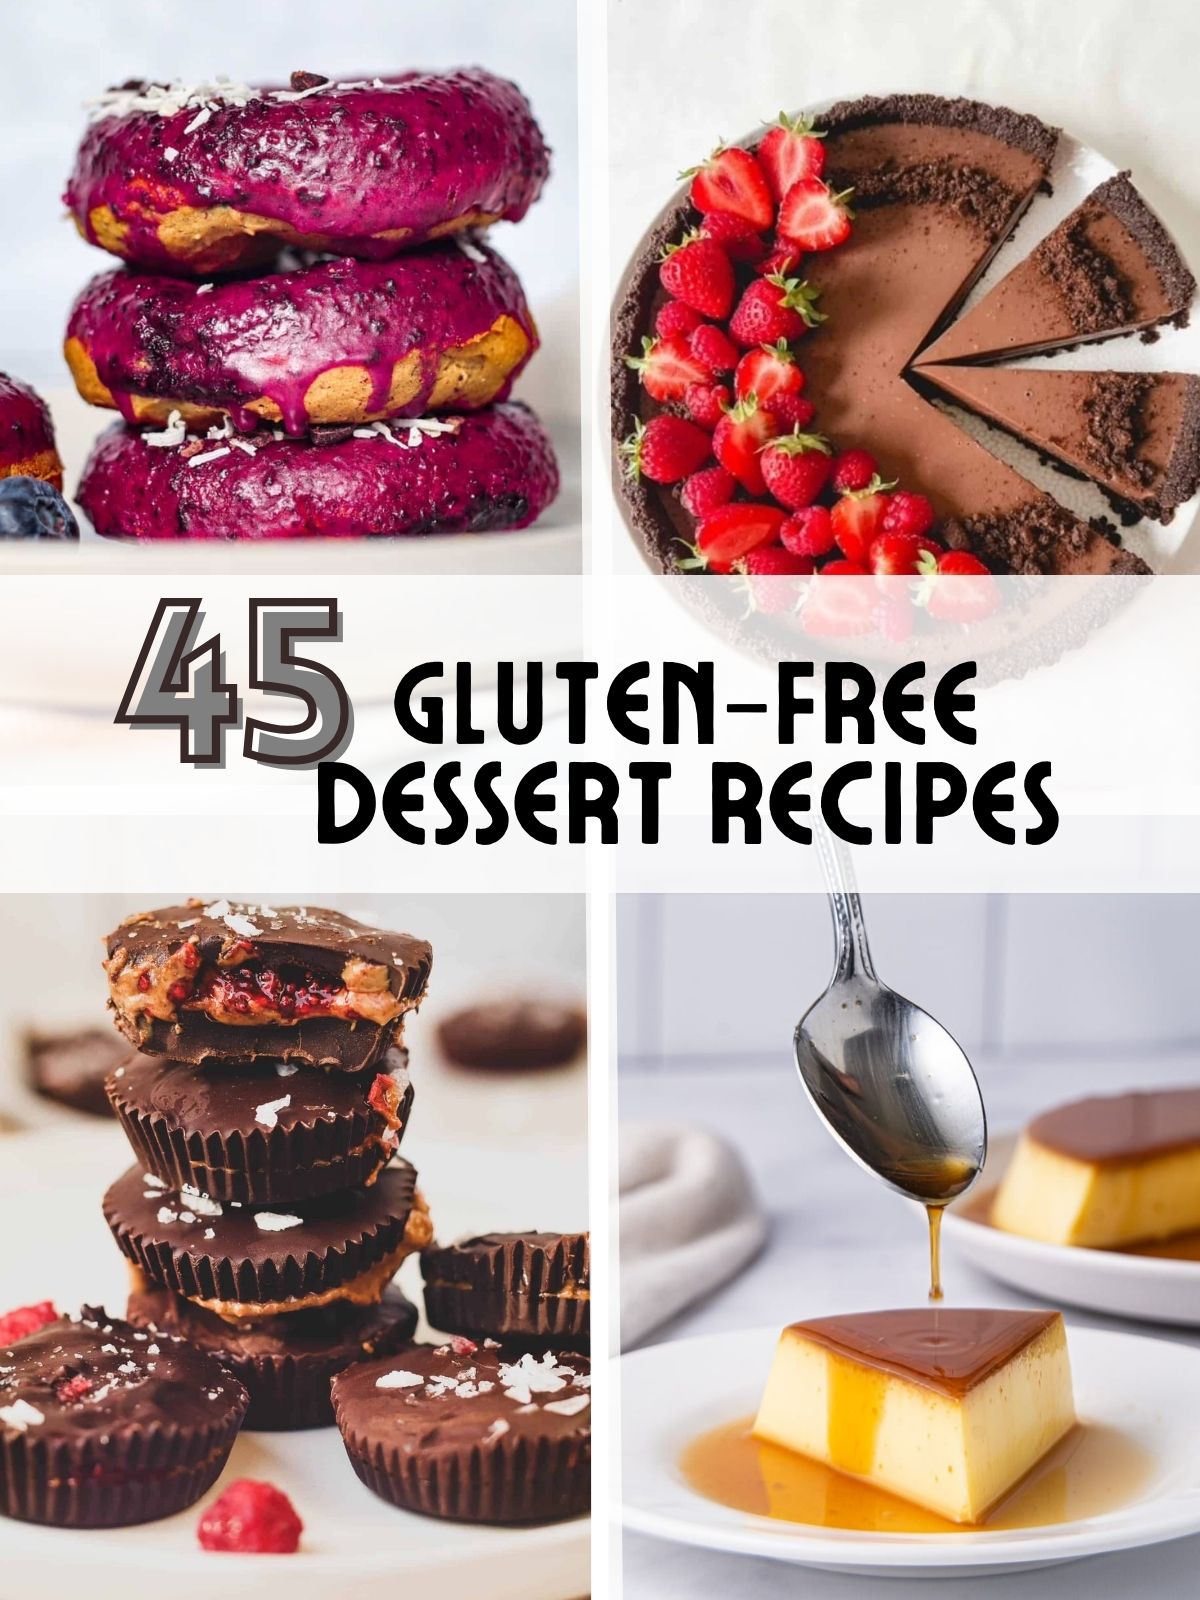 45 Gluten-Free Dessert Recipes for All to Enjoy!